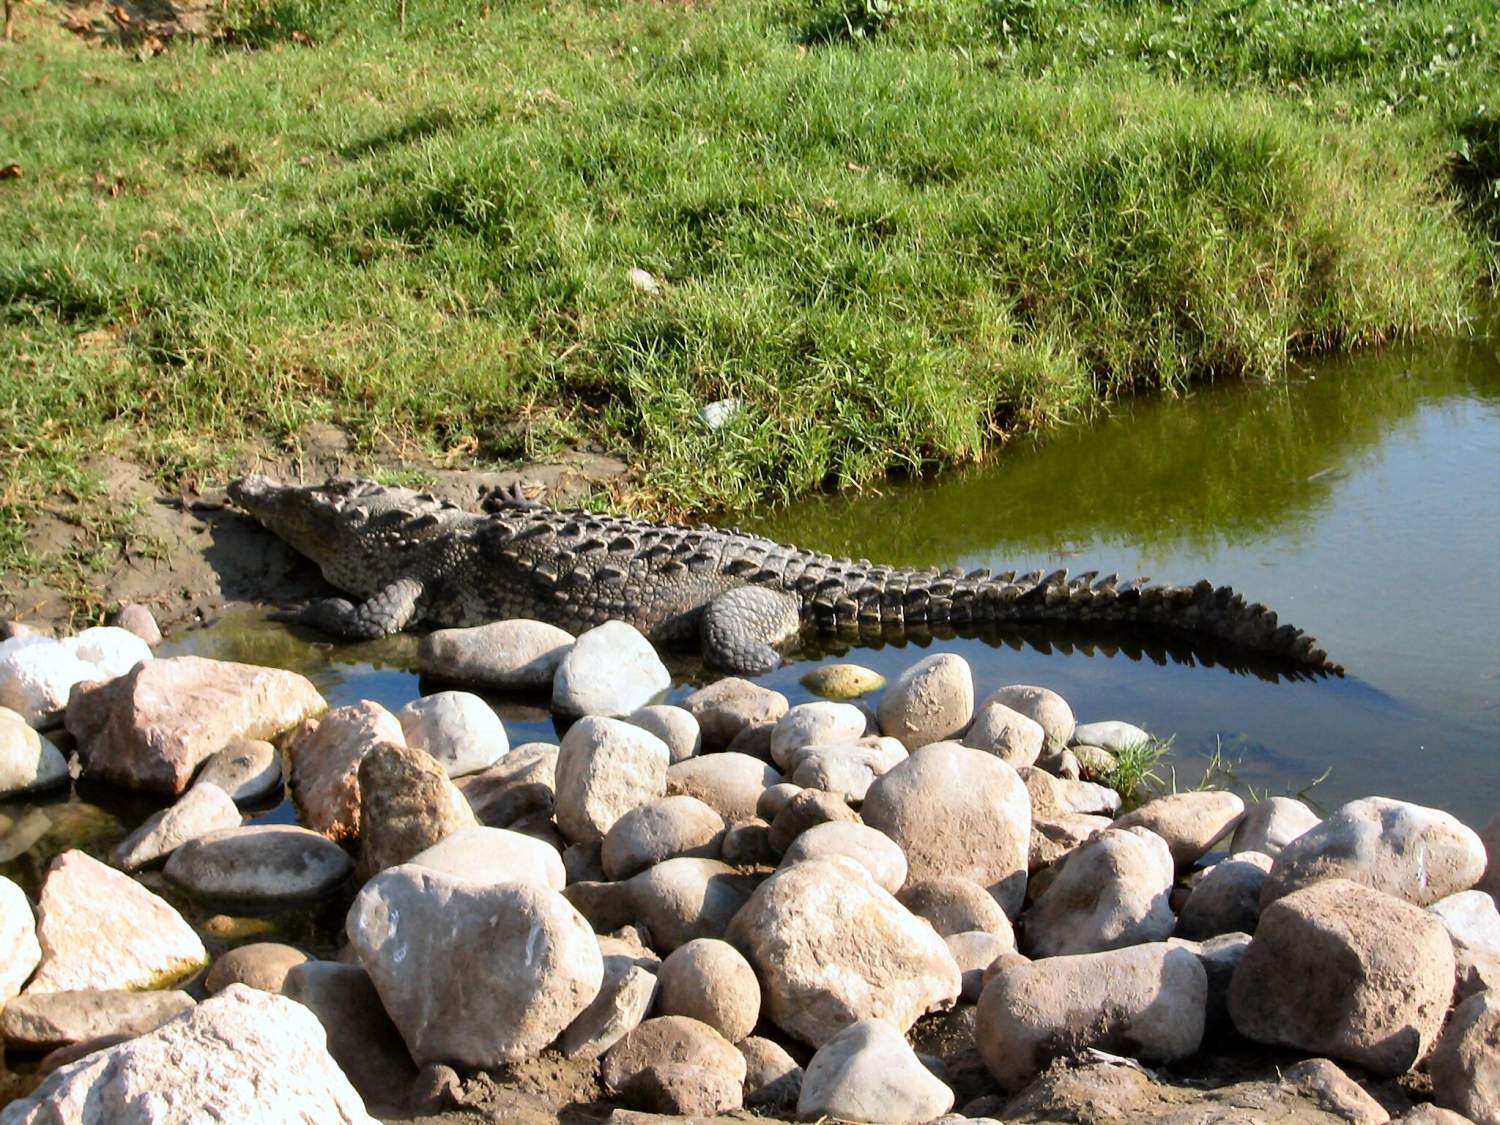 Crocodile in Ixtapa, Mexico